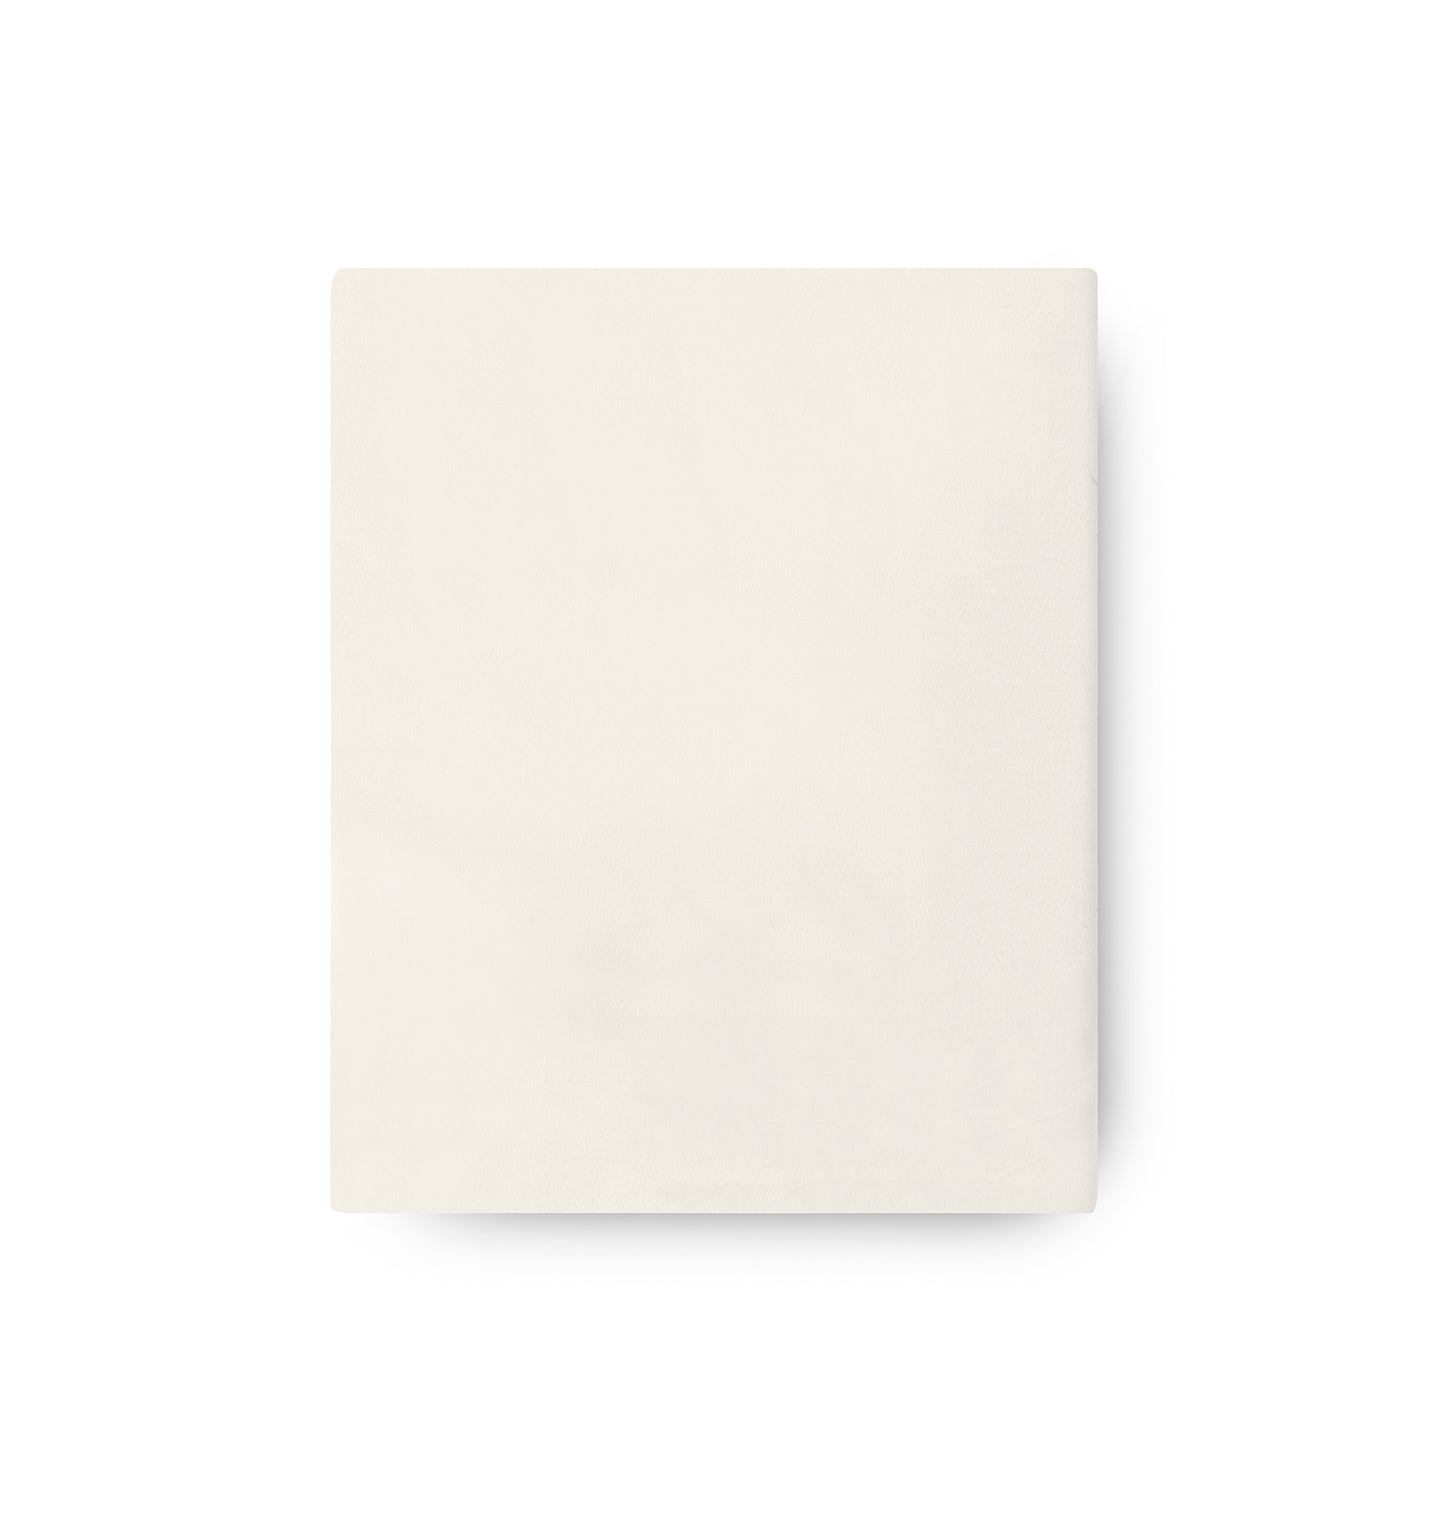 Fresco White Fitted Sheet